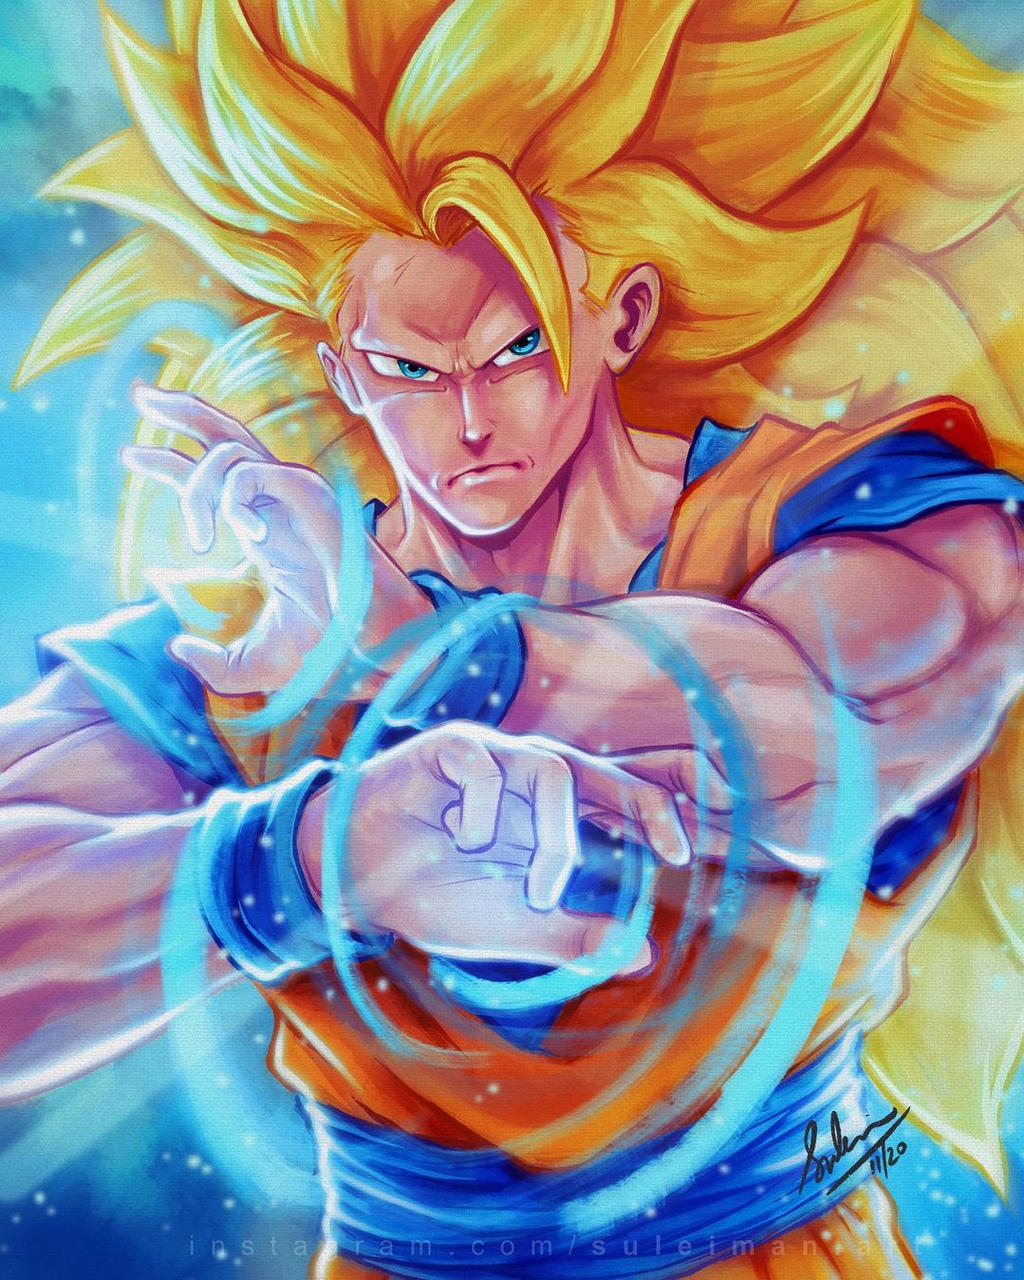 Pixilart - Super Saiyan Blue 3 Goku by VERMAN8ER